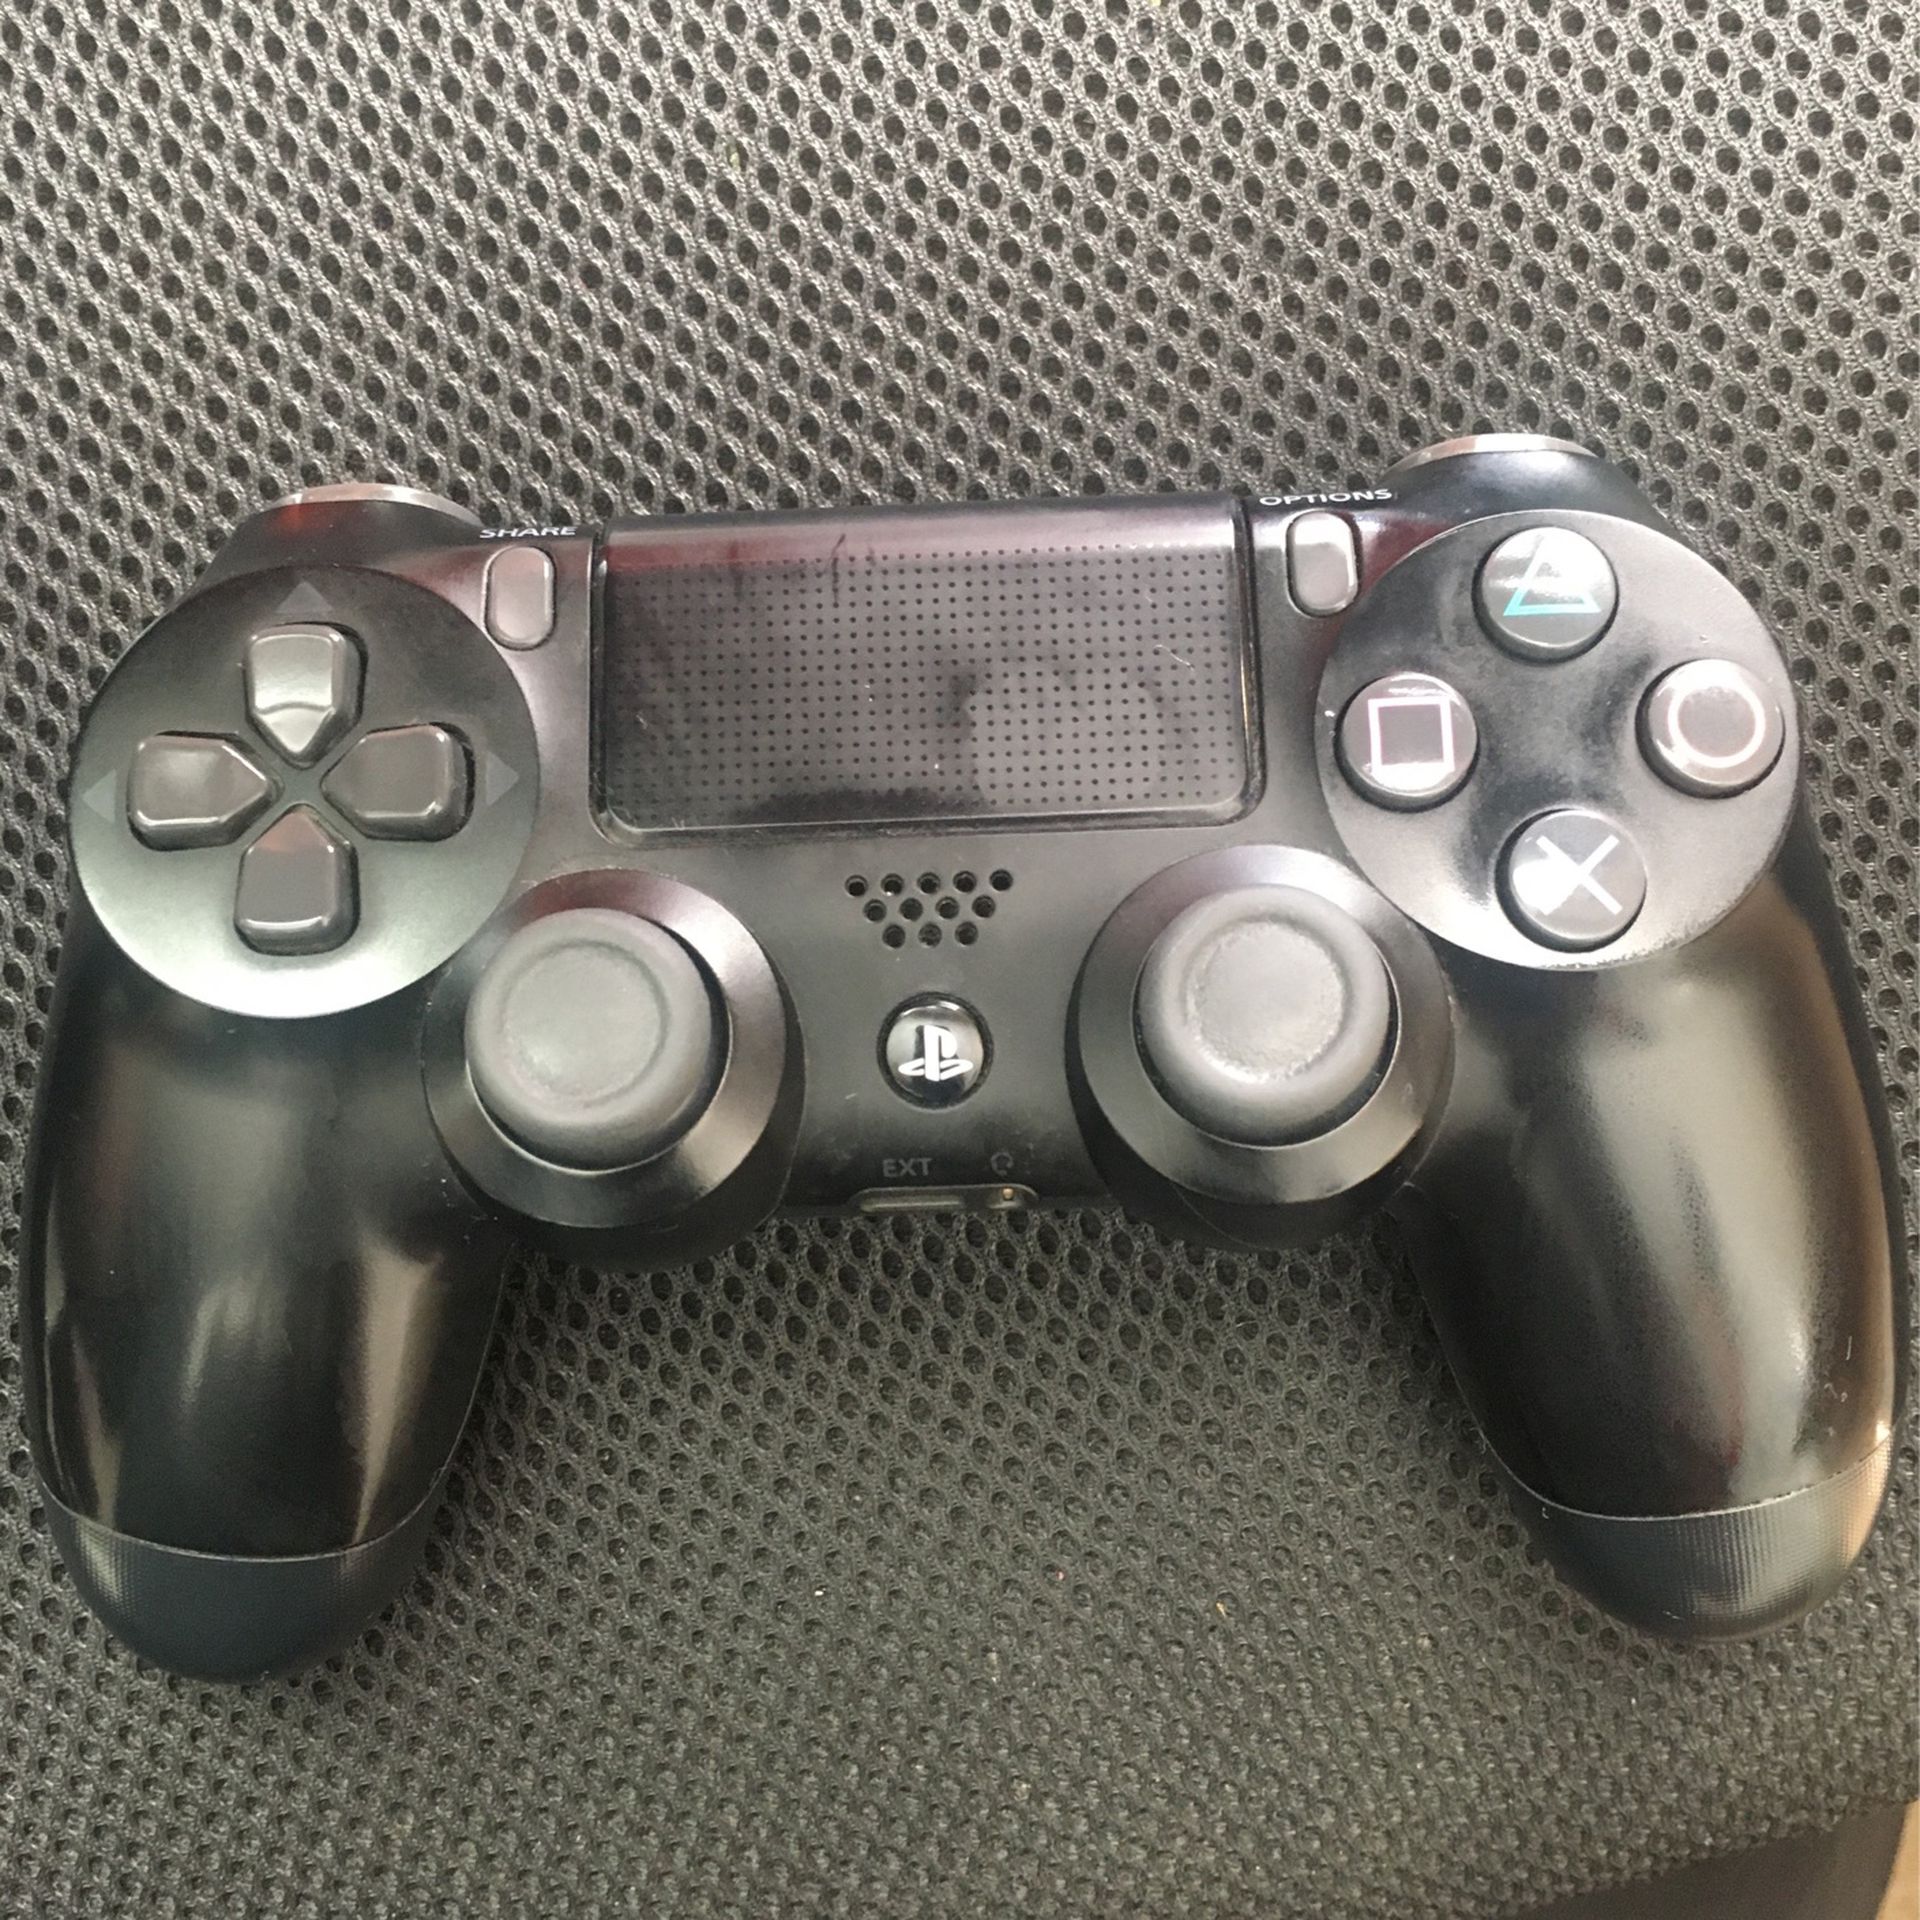 PS4 Controller (Black)